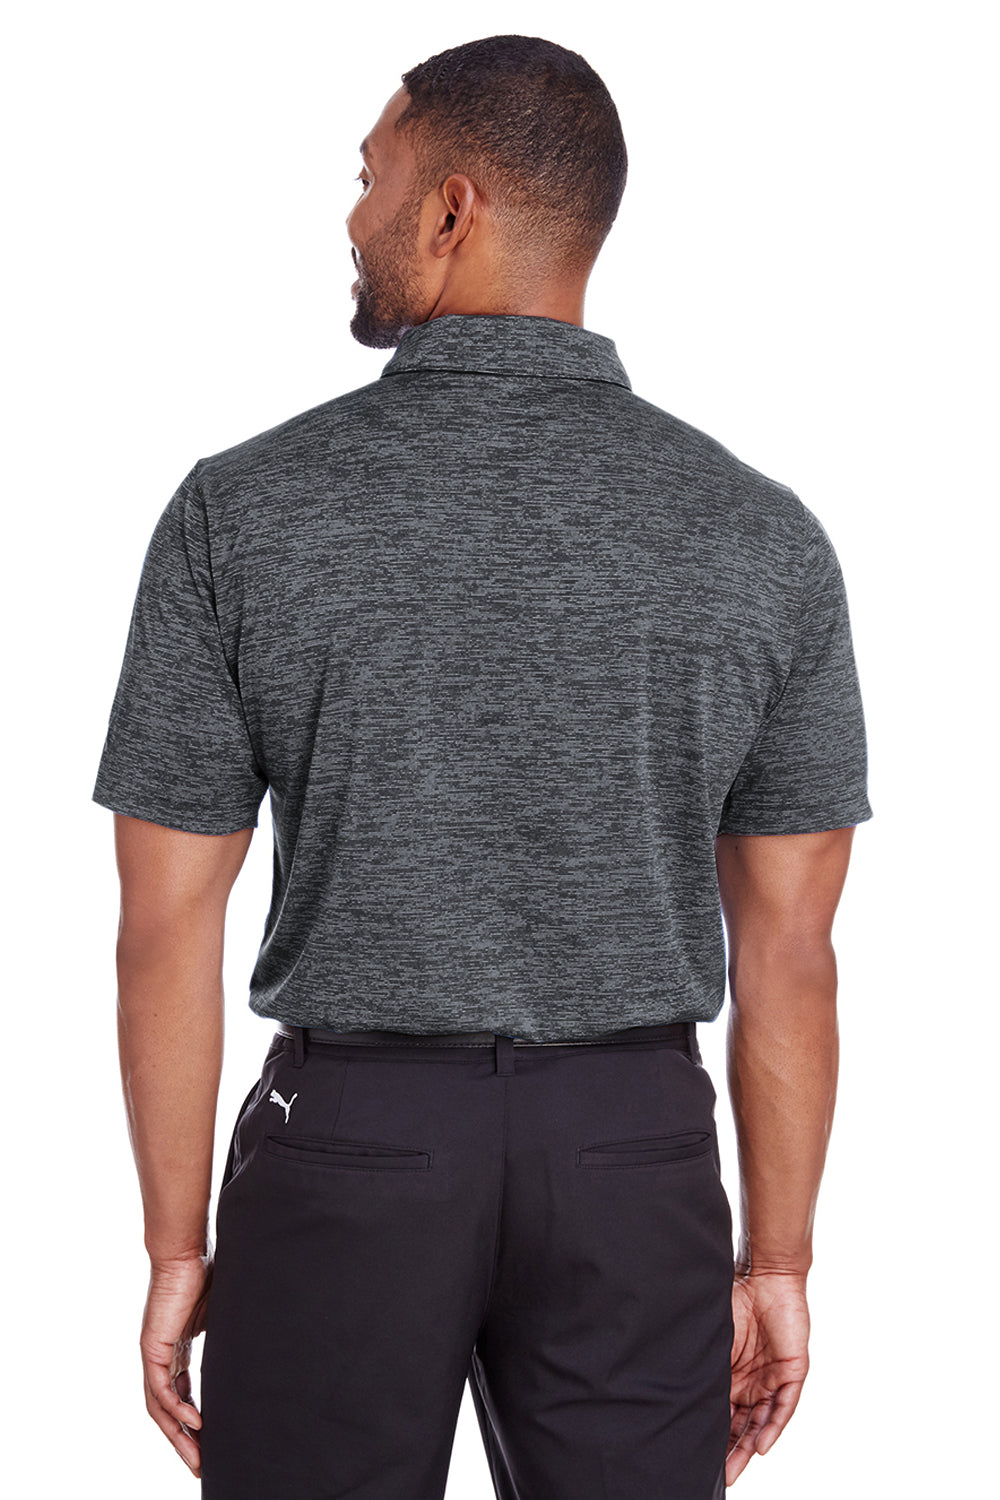 Puma 596801 Mens Icon Performance Moisture Wicking Short Sleeve Polo Shirt Black Back